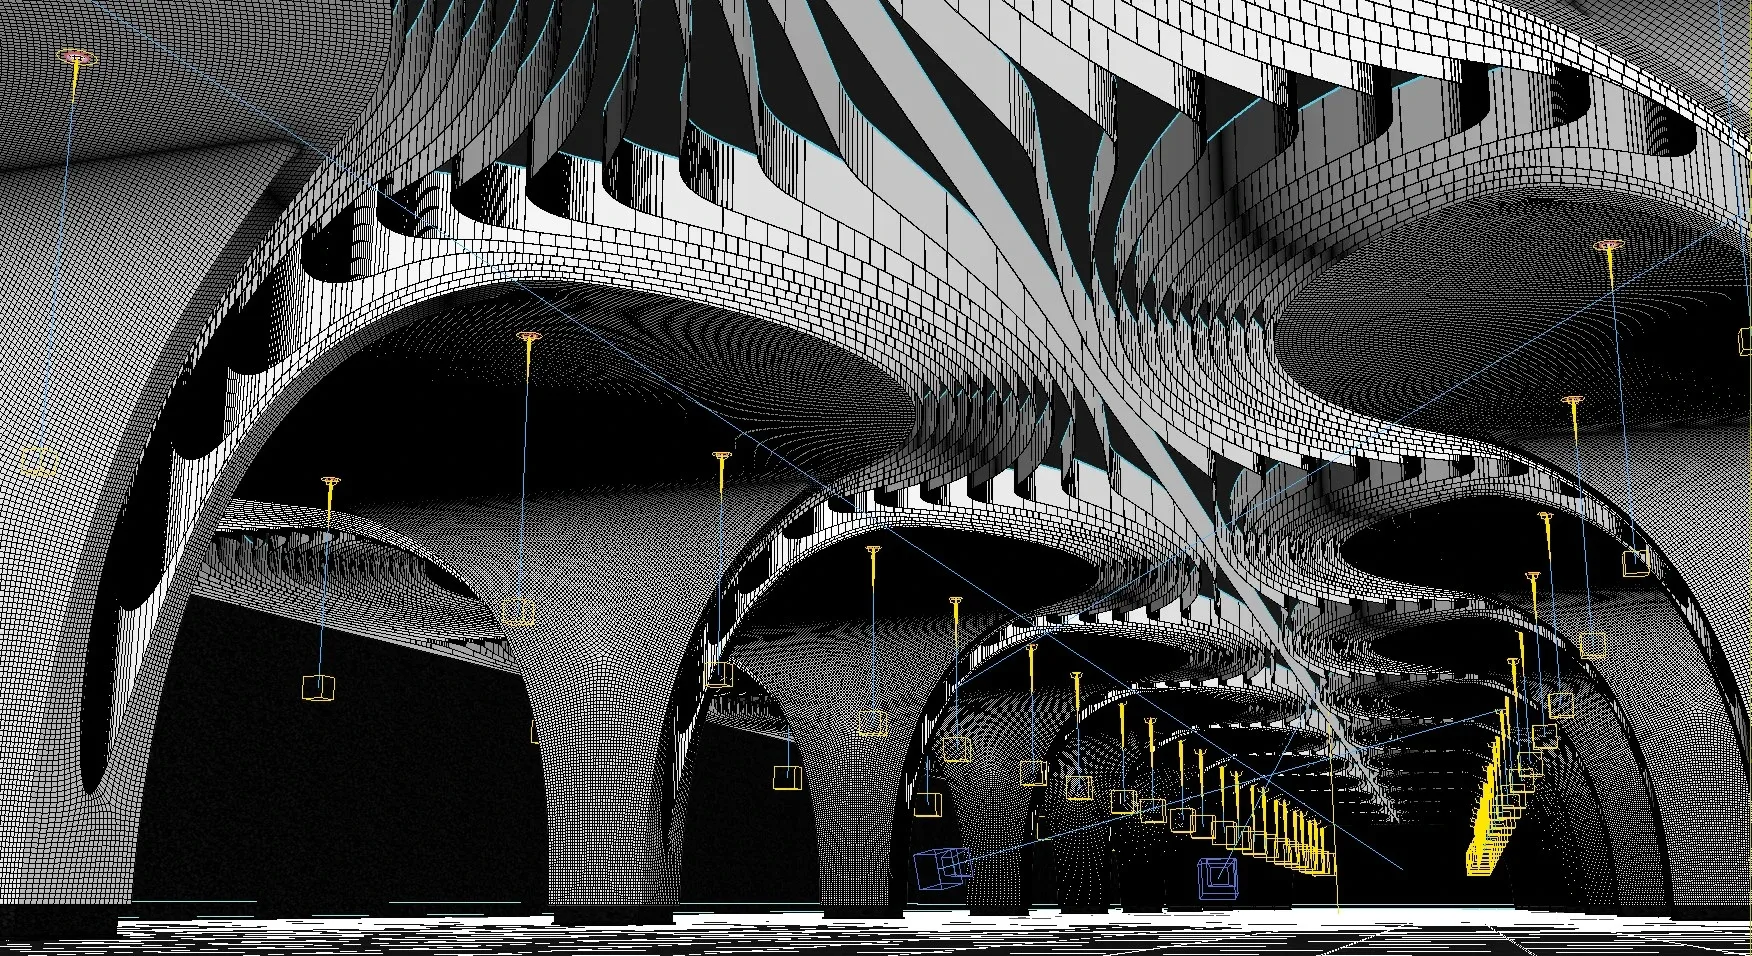 Futuristic Architecture - Parametric Shanghai Subway Yuyuan Metro Station